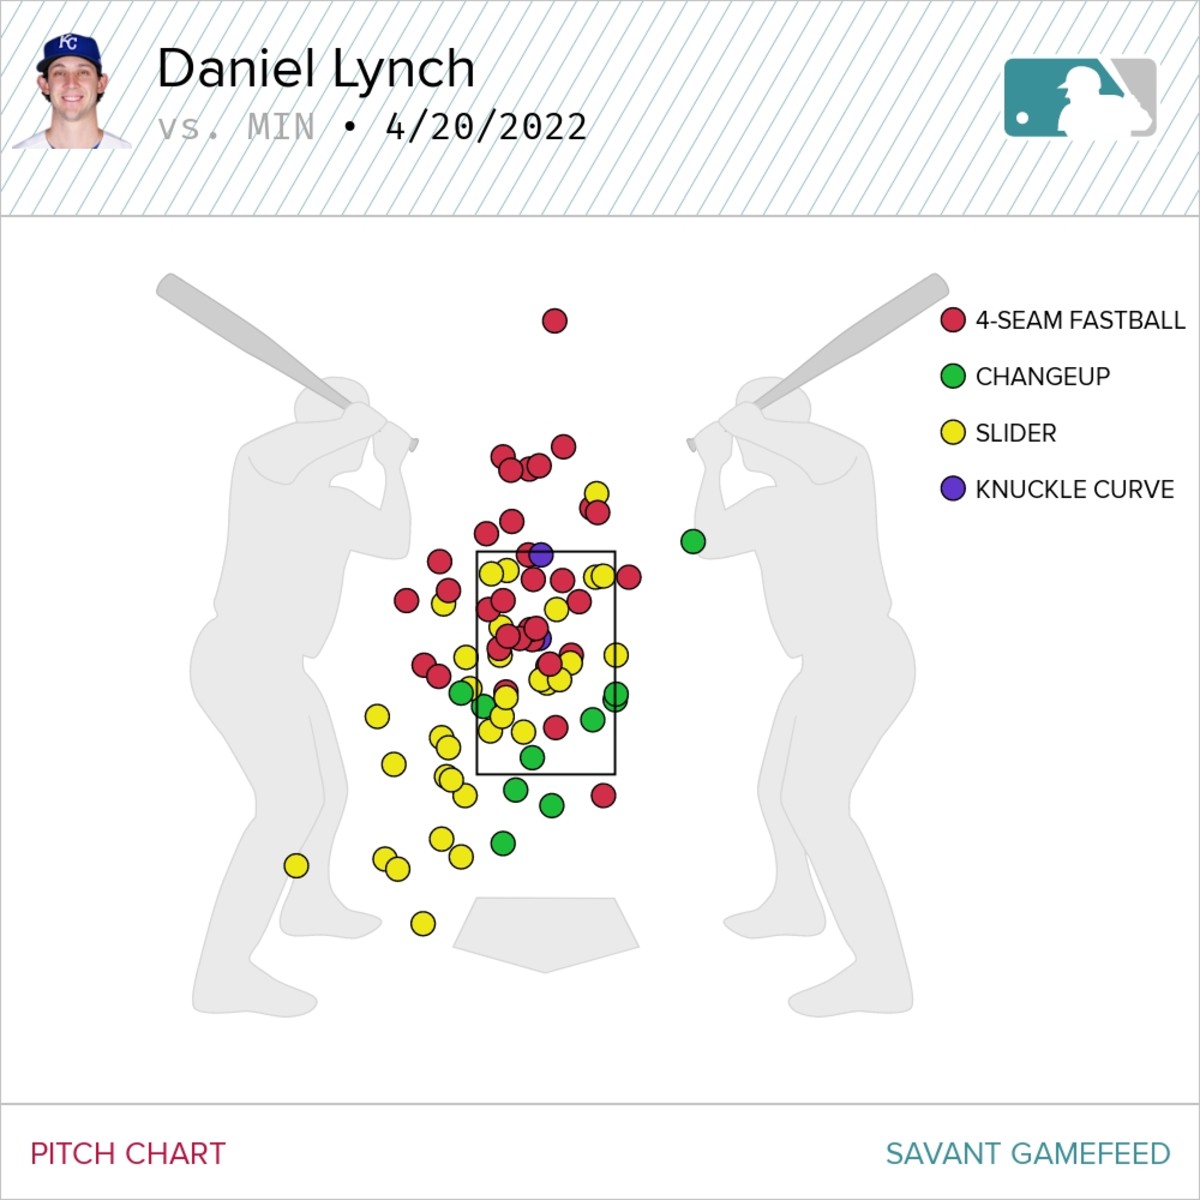 Daniel Lynch pitch chart 04/20/22, courtesy of Baseball Savant.